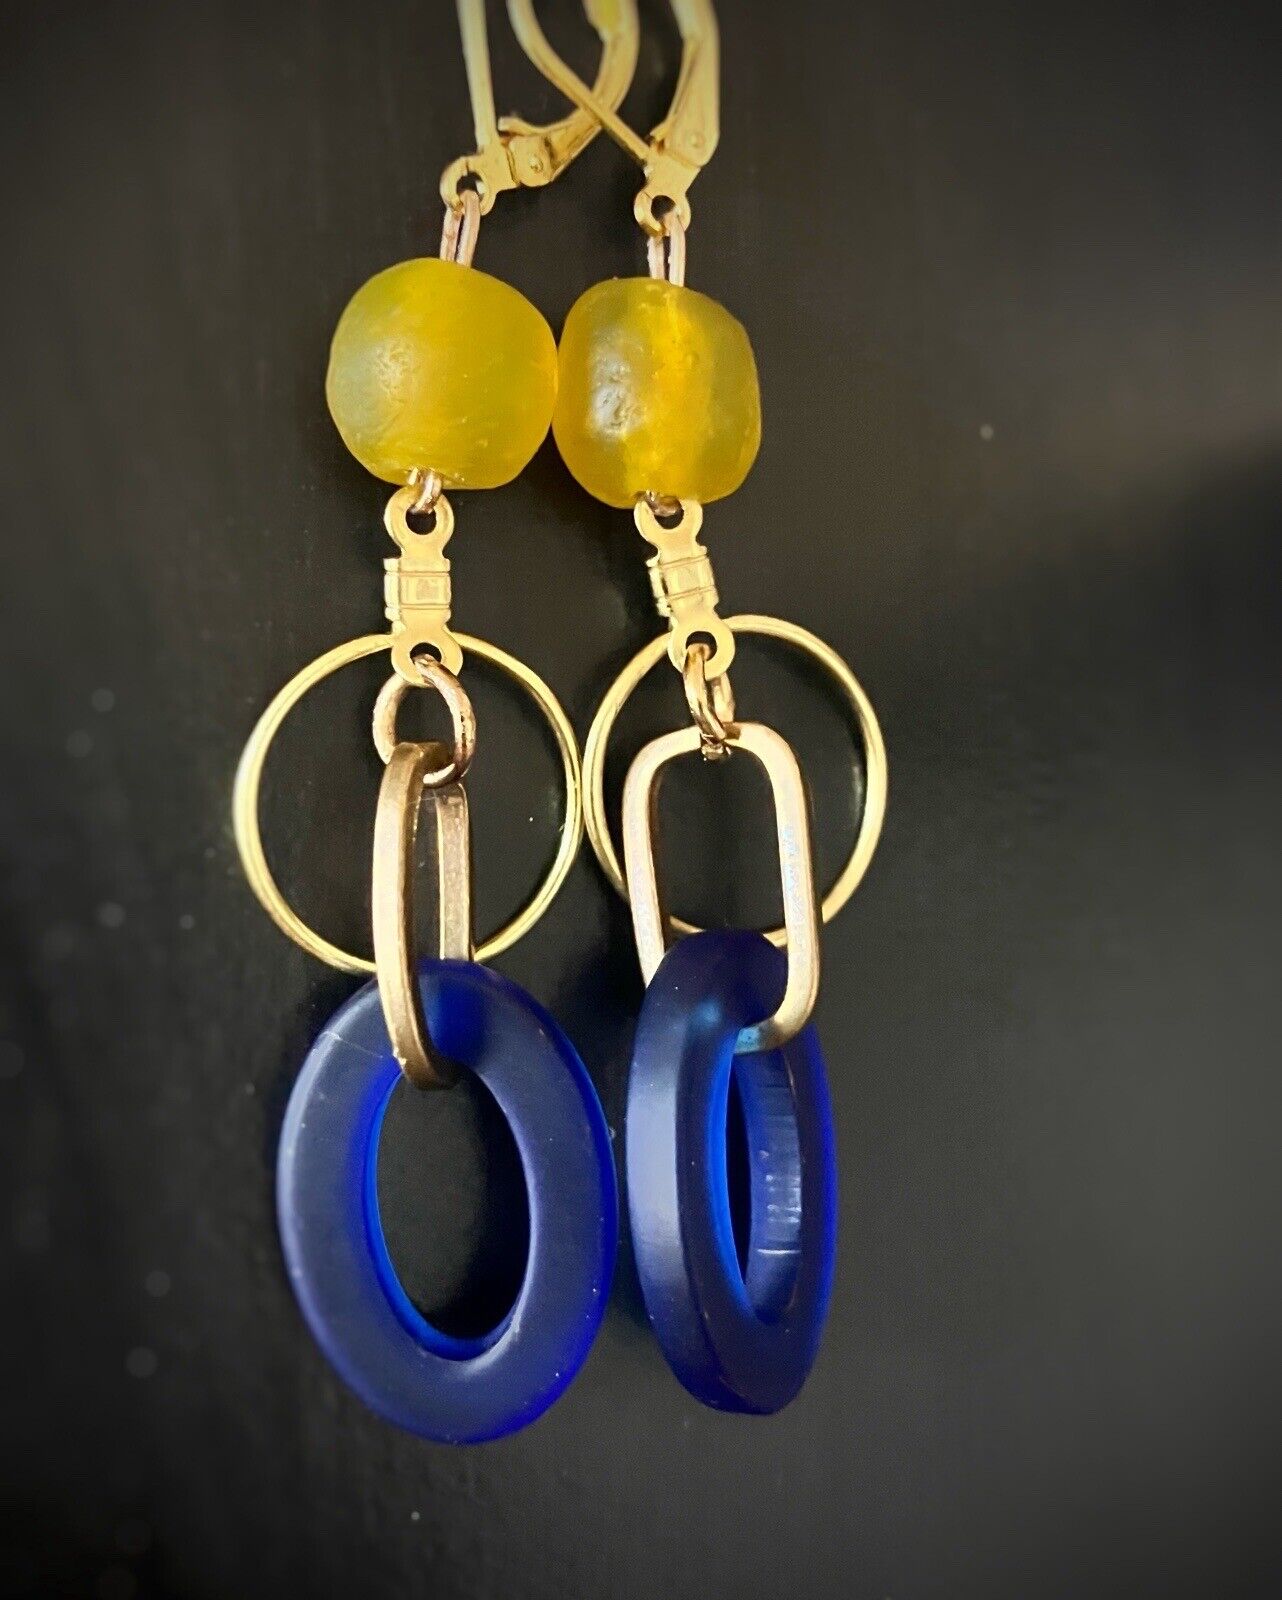 N E W  HBCU SOROR Inspired 1922 earrings Inspired Earrings